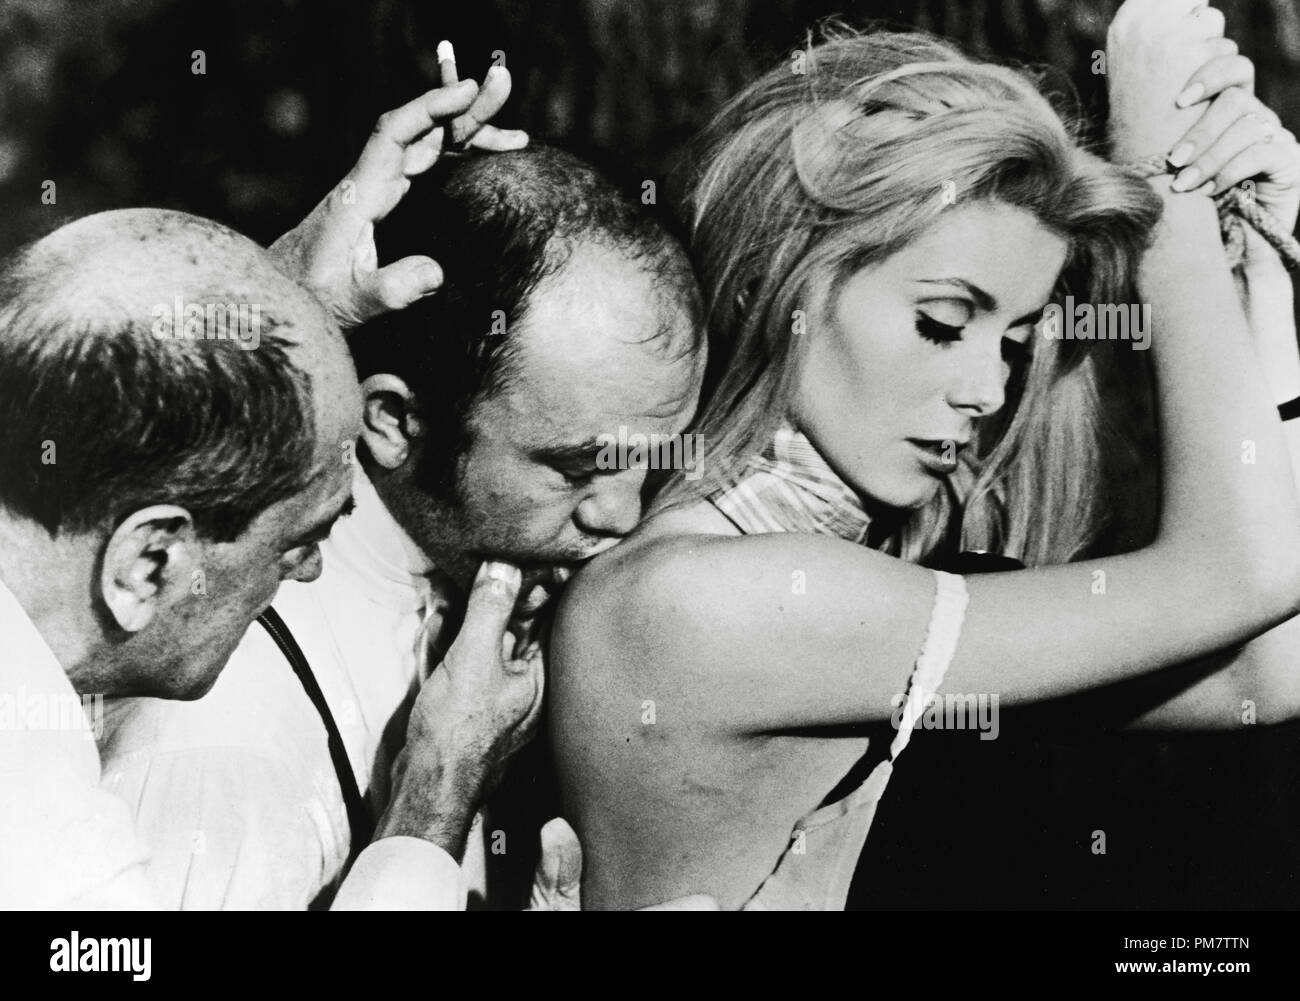 Regisseur Luis Bunuel und Catherine Deneuve, "Belle de jour", 1967. Datei Referenz # 31386 794 Stockfoto